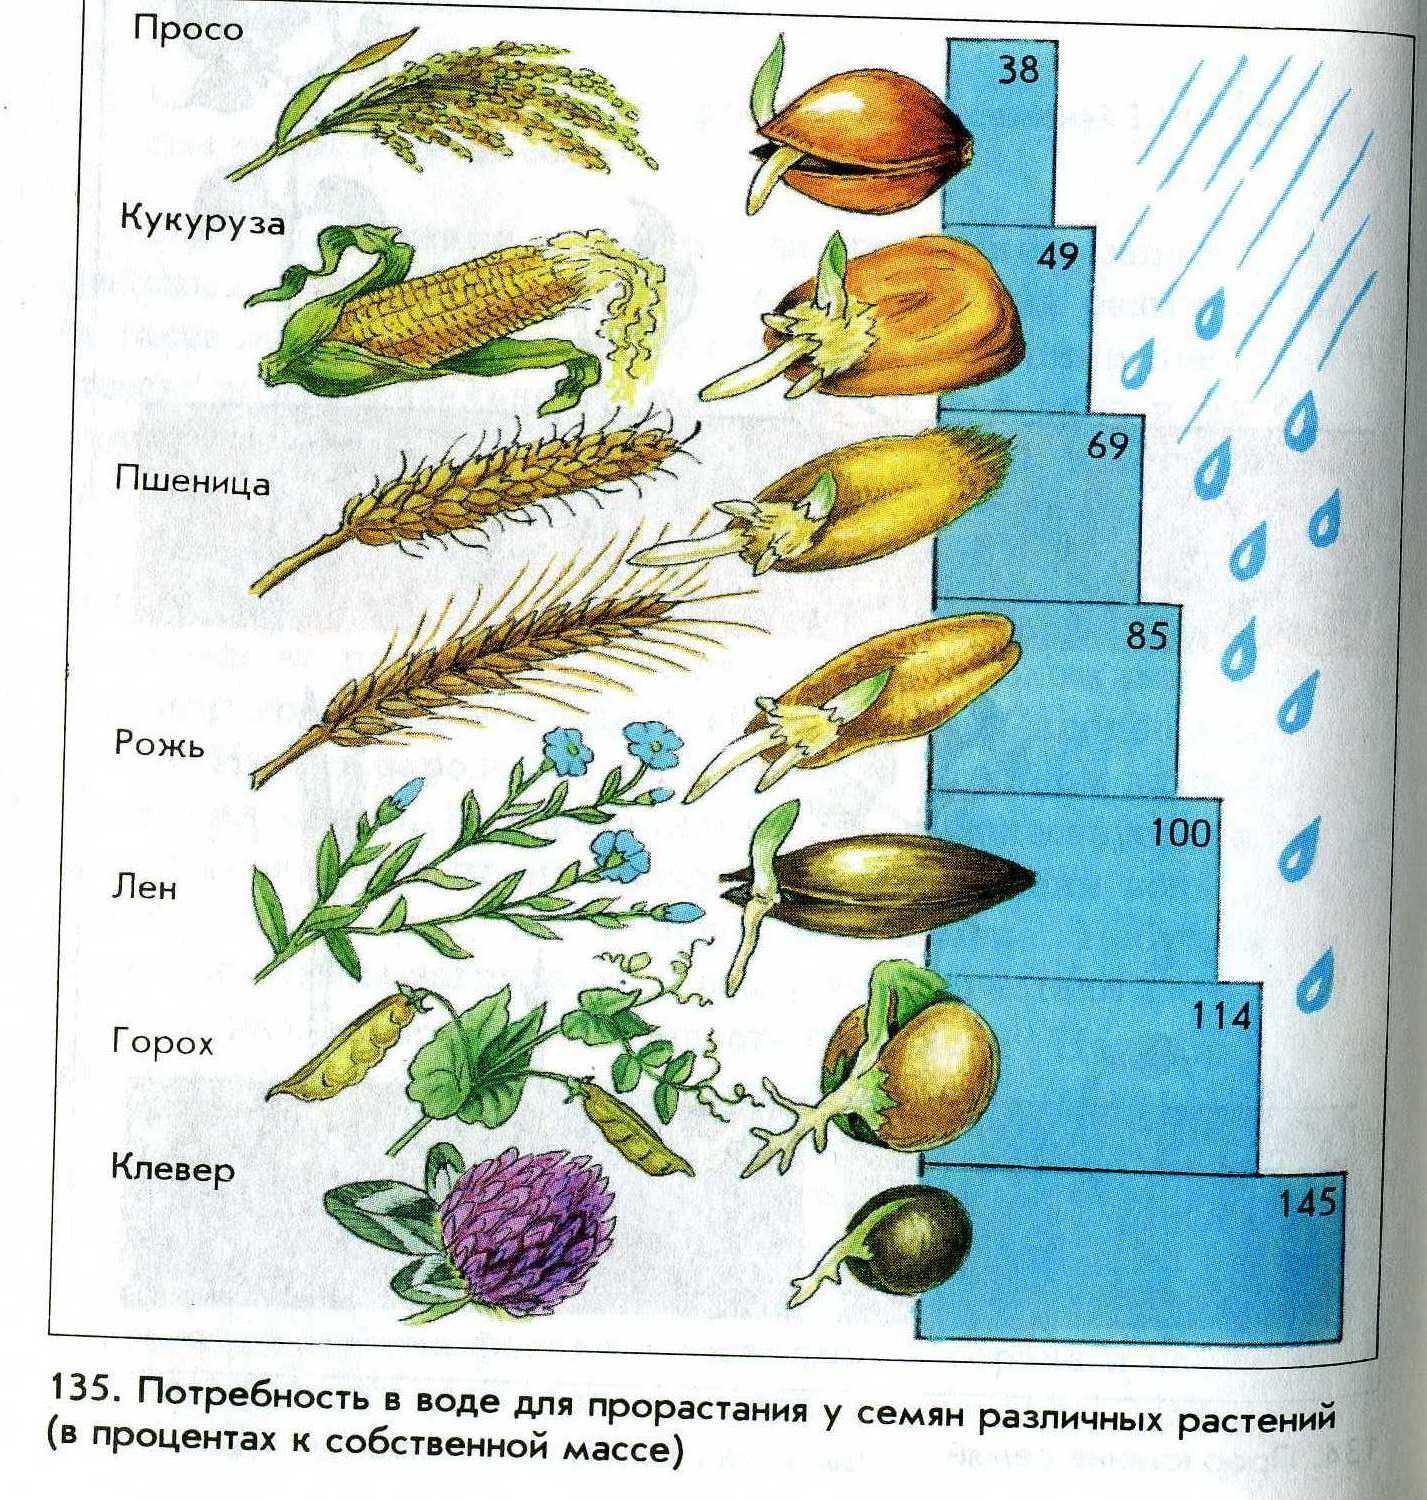 Семена кукурузы какую температуру. Прорастание семян кукурузы. Температура прорастания семян кукурузы. Температура прорастания семян гороха. Температура прорастания разных семян.